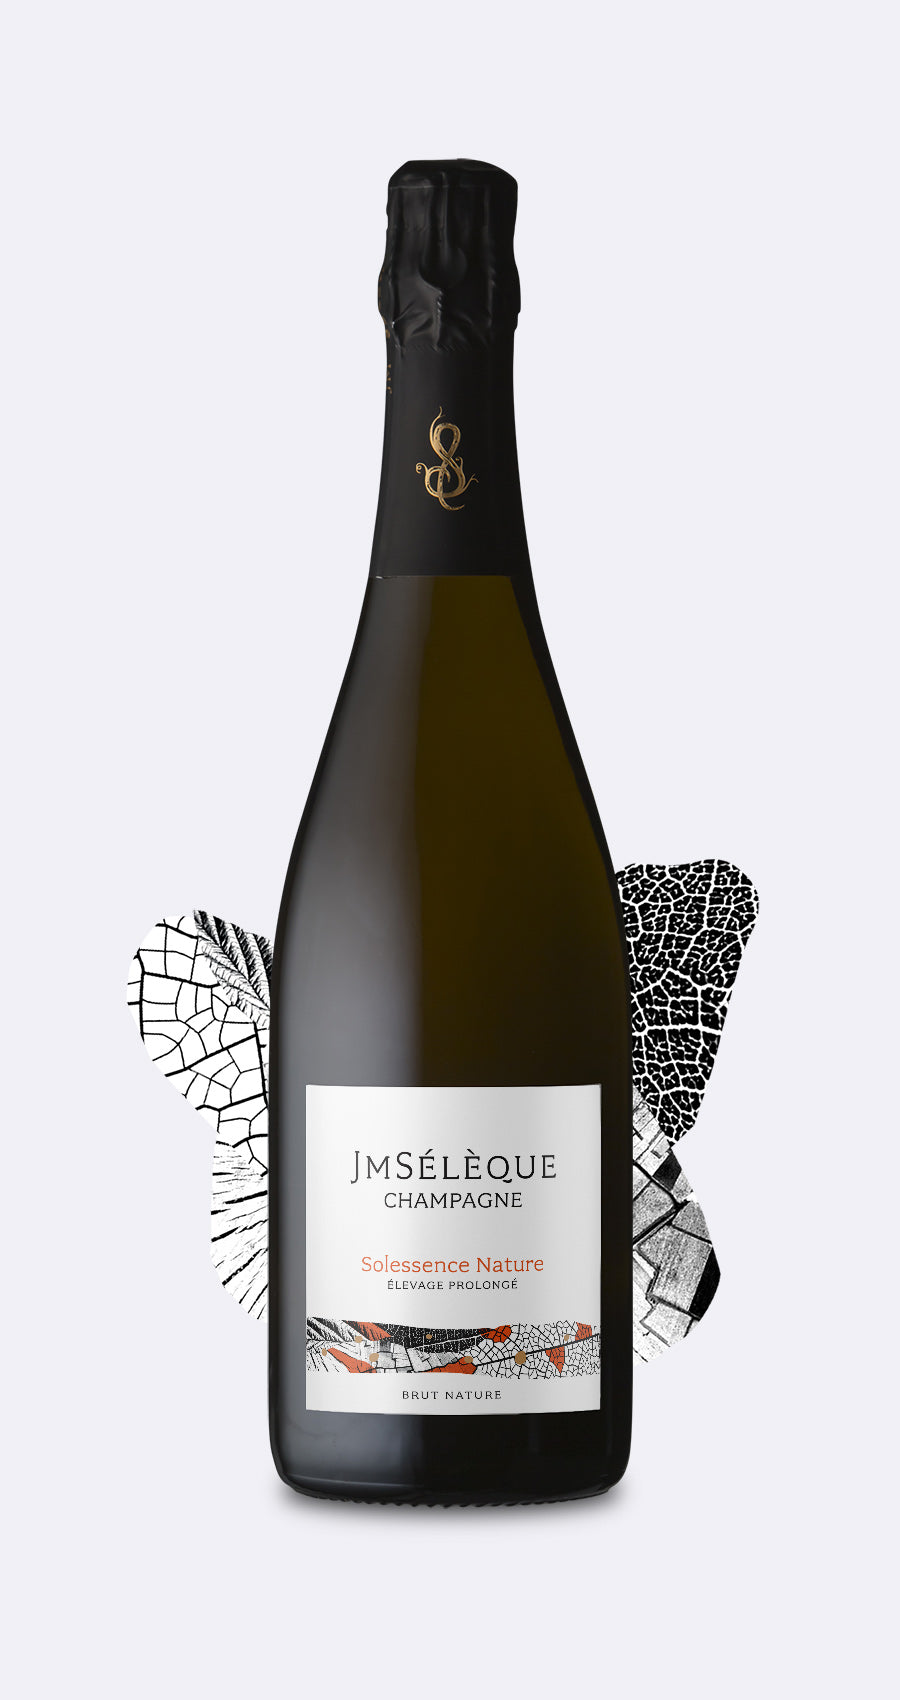 JM Seleque Champagne Brut Nature Solessence Nature Elevage Prolonge (16)